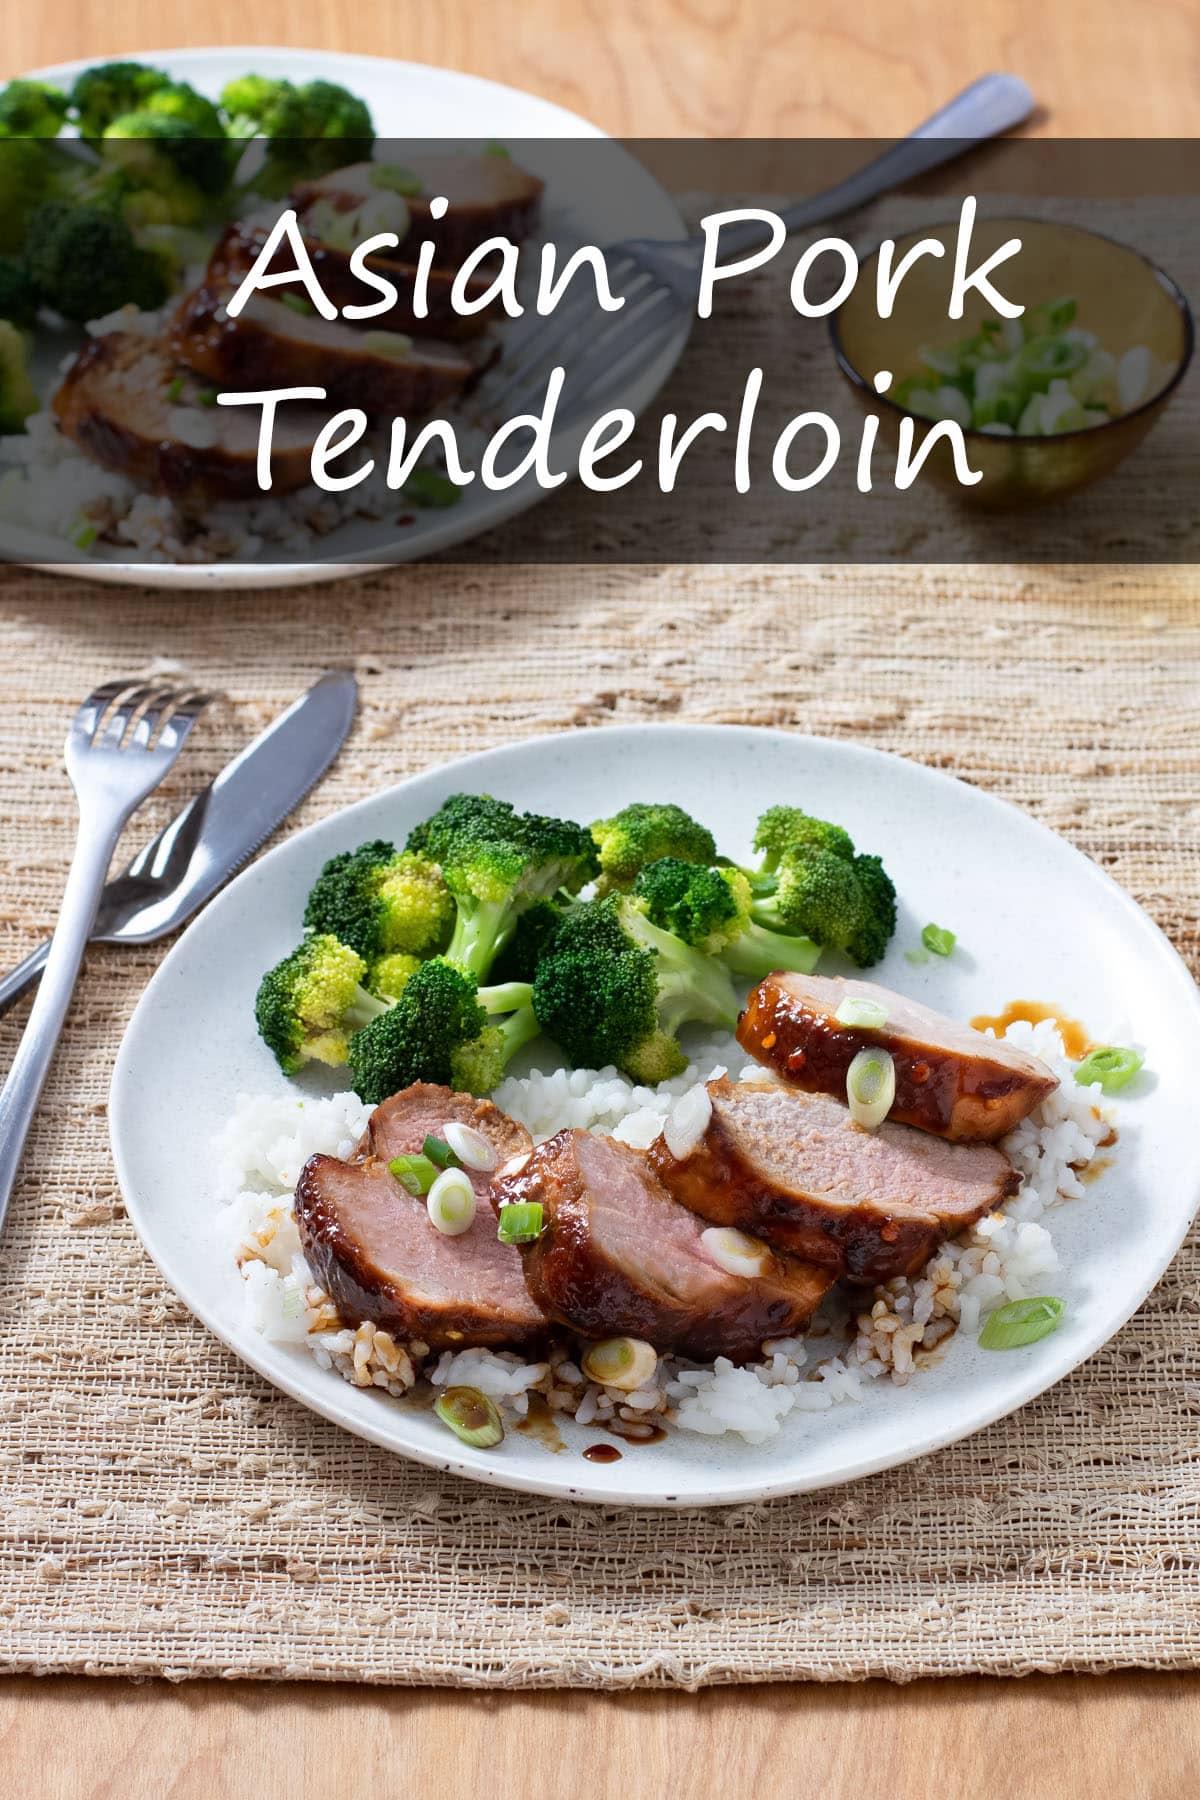 Asian Pork Tenderloin